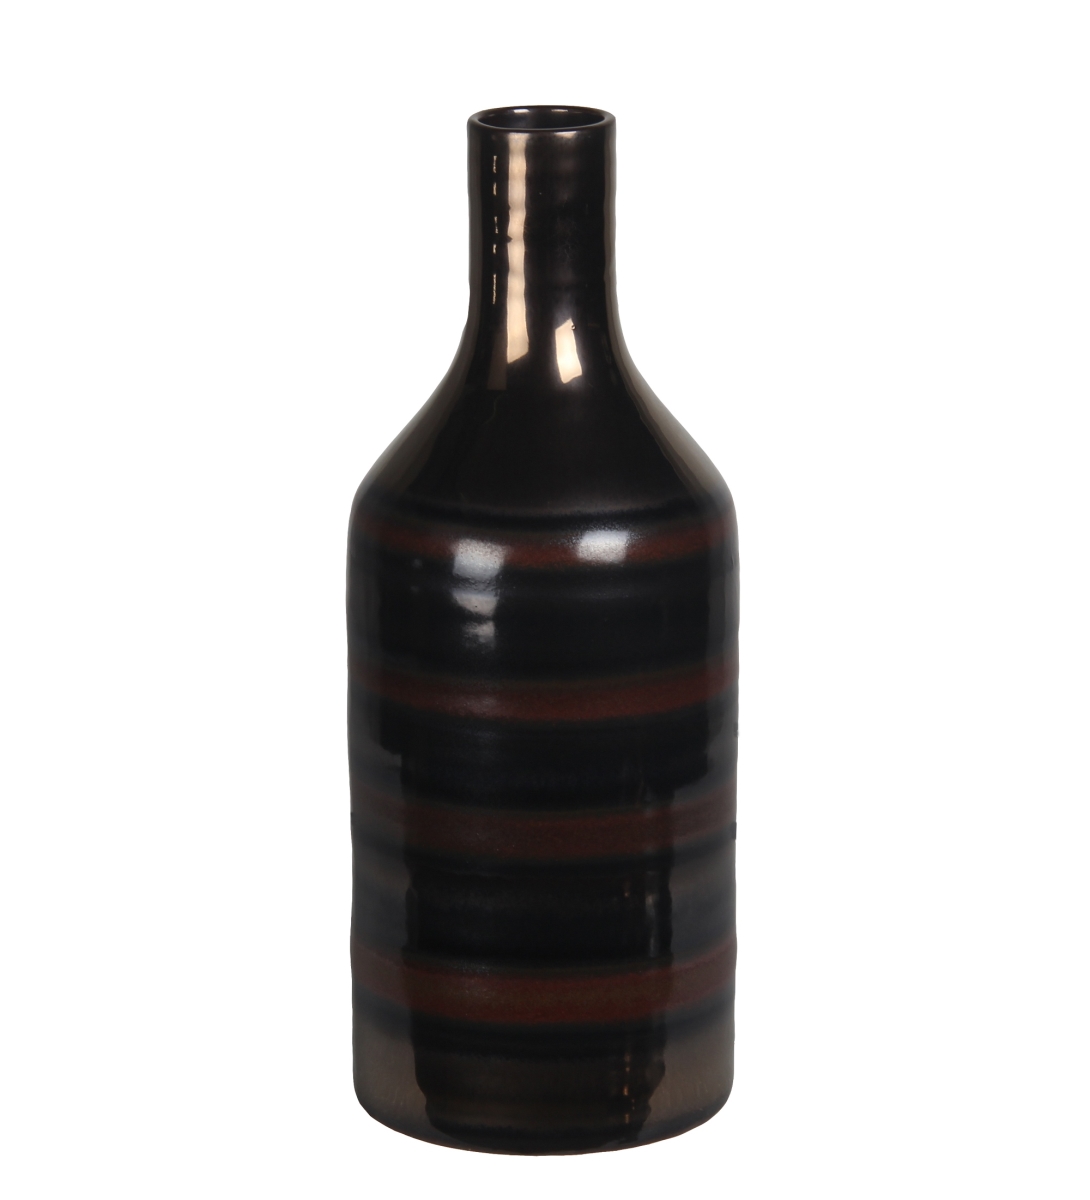 78215 5 X 5 X 13 In. Two Tone Brown Ceramic Vase, Small